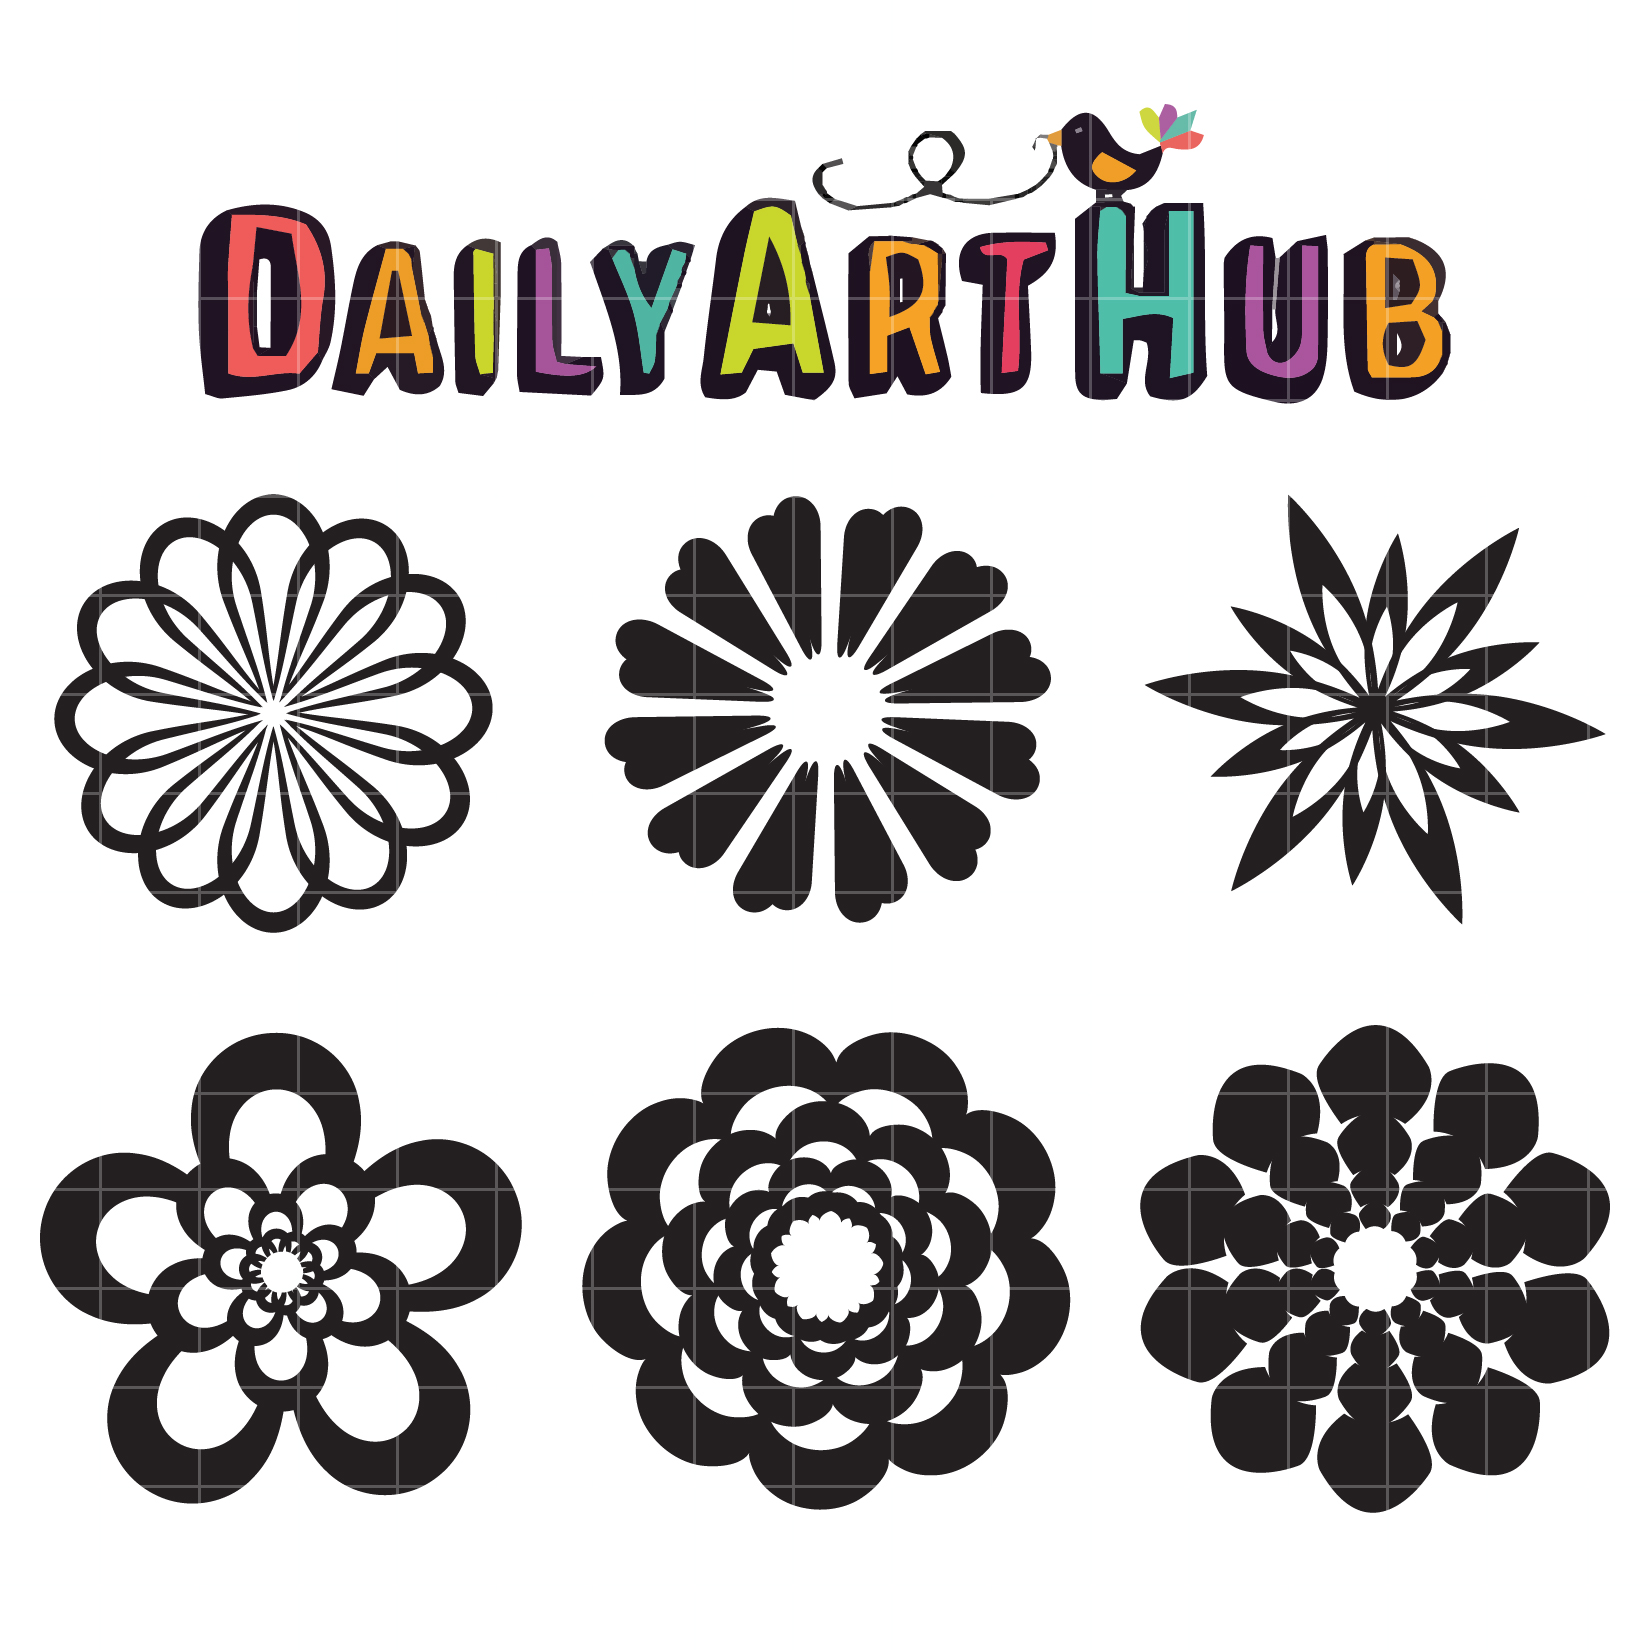 https://www.dailyarthub.com/wp-content/uploads/2015/10/Flower-Style.jpg